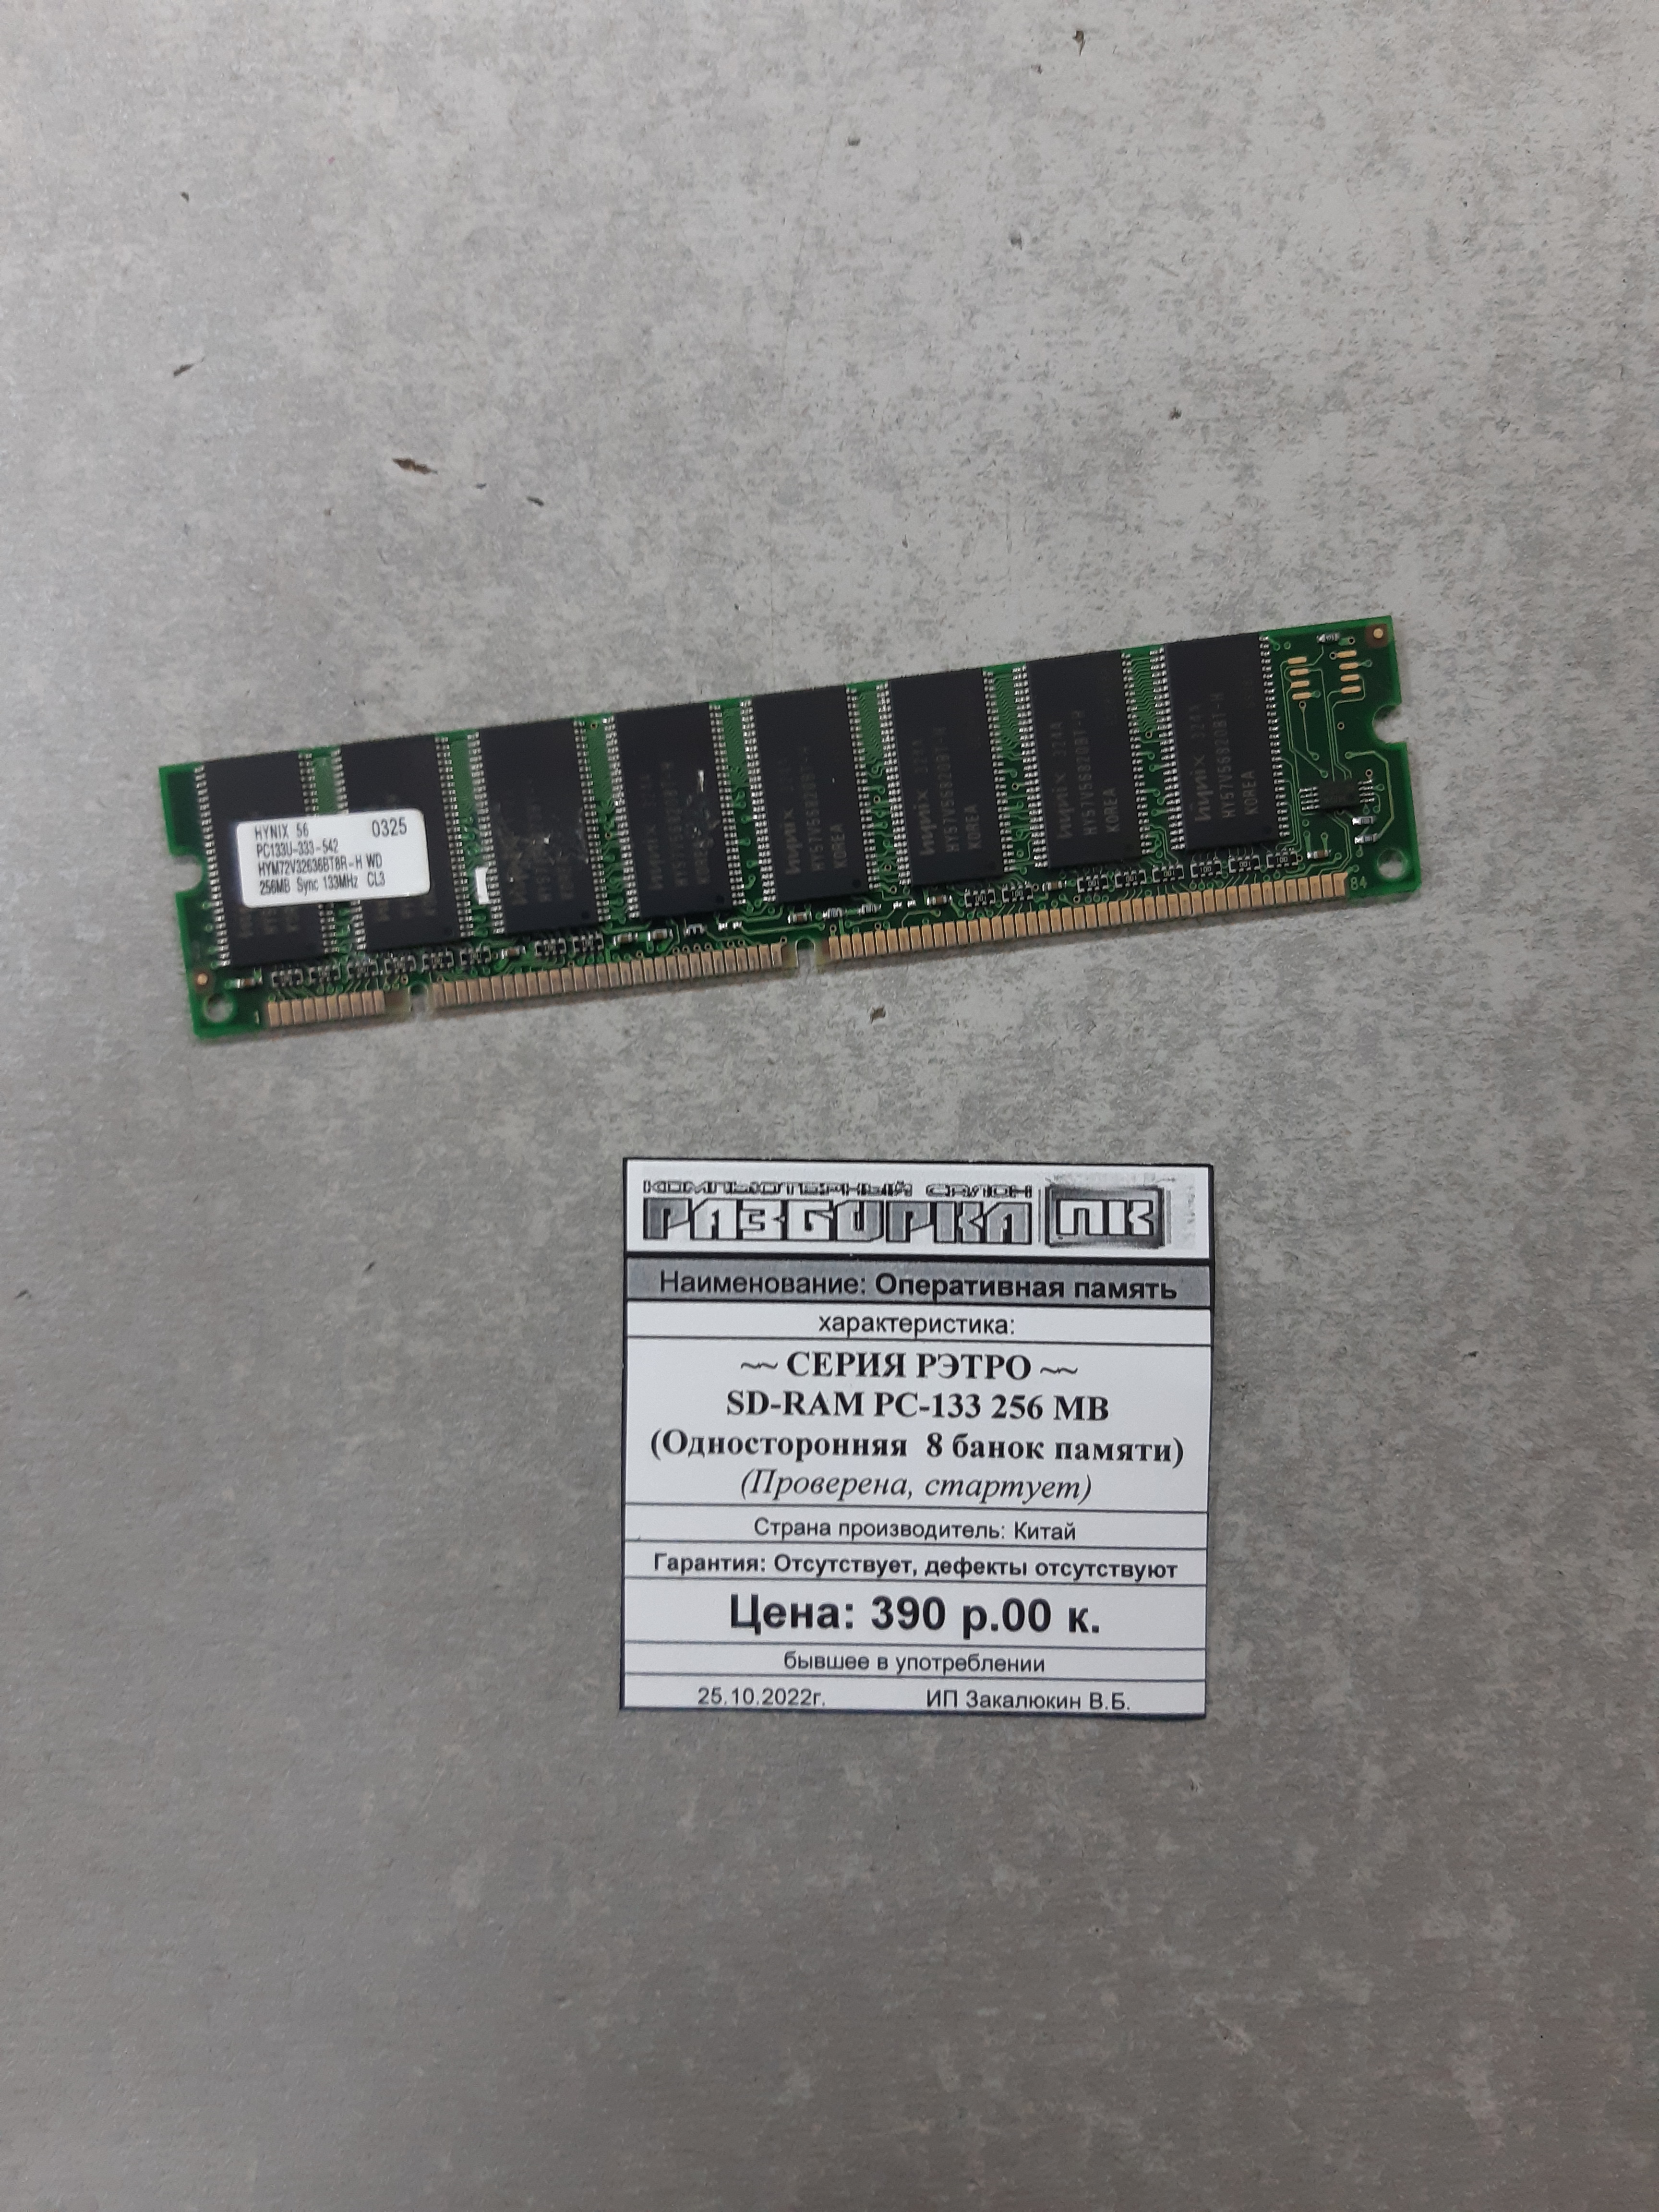 Оперативная память SD-RAM PC-133 256 MB 8 банок